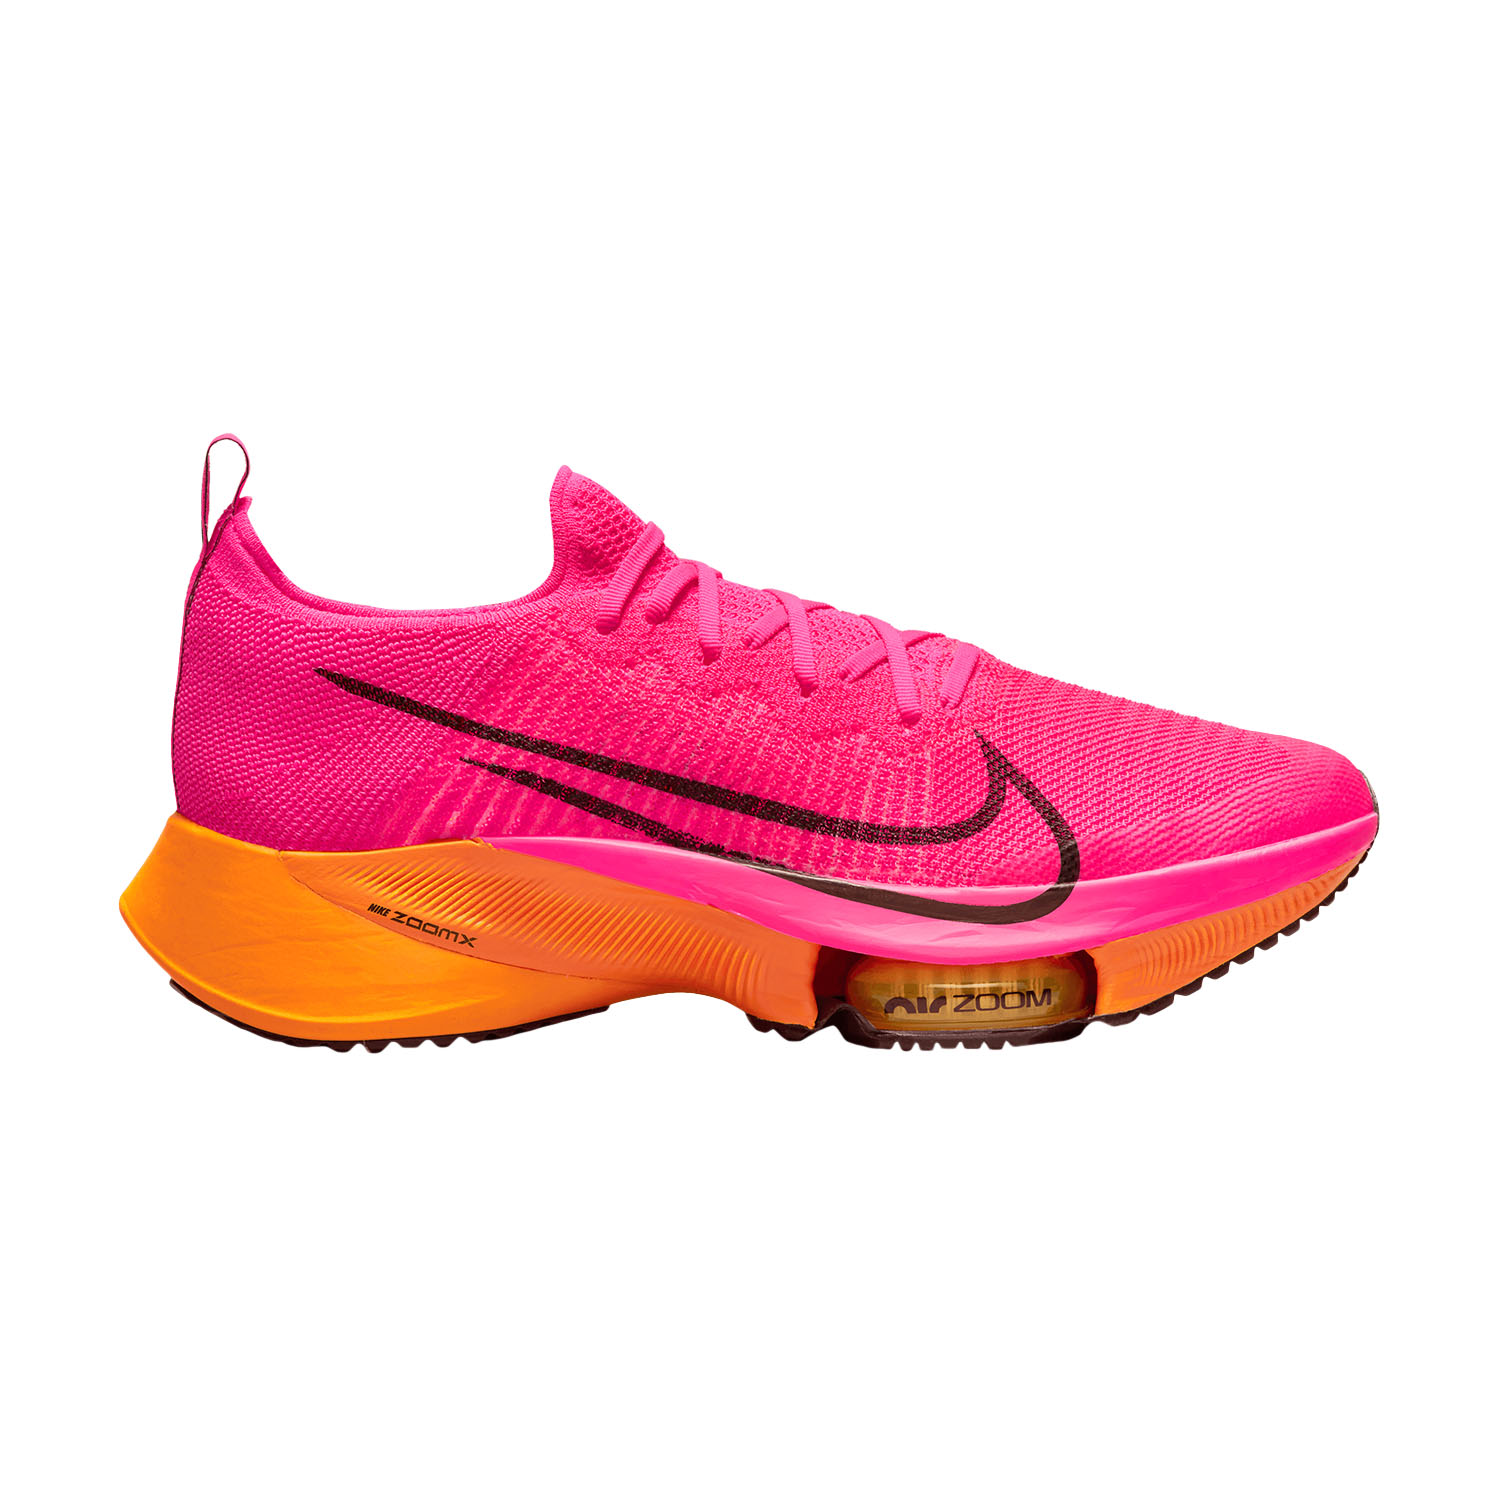 nike pink running shoes mens